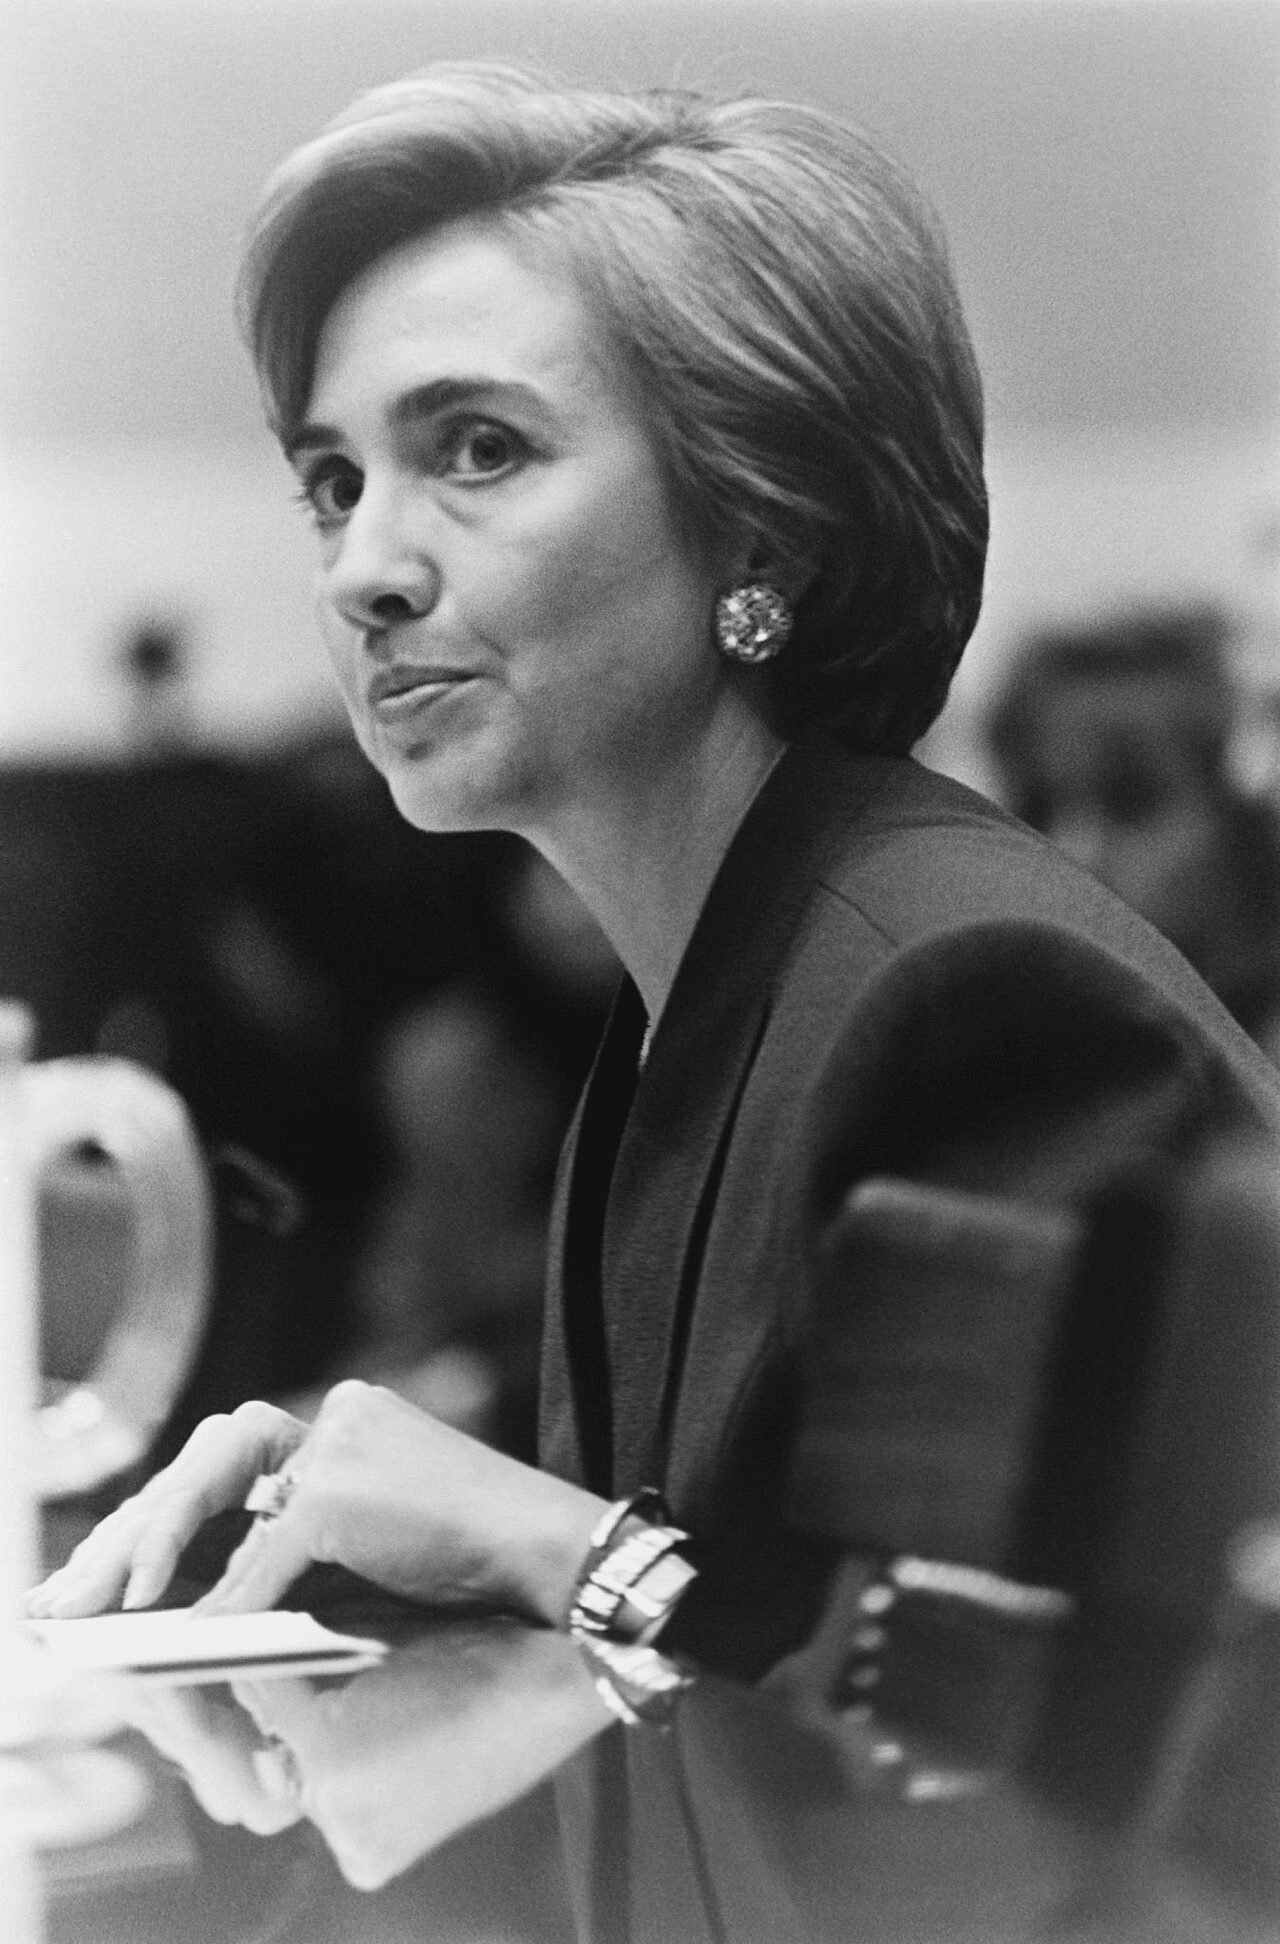 Hillary Clinton testifying before Congress, 1993